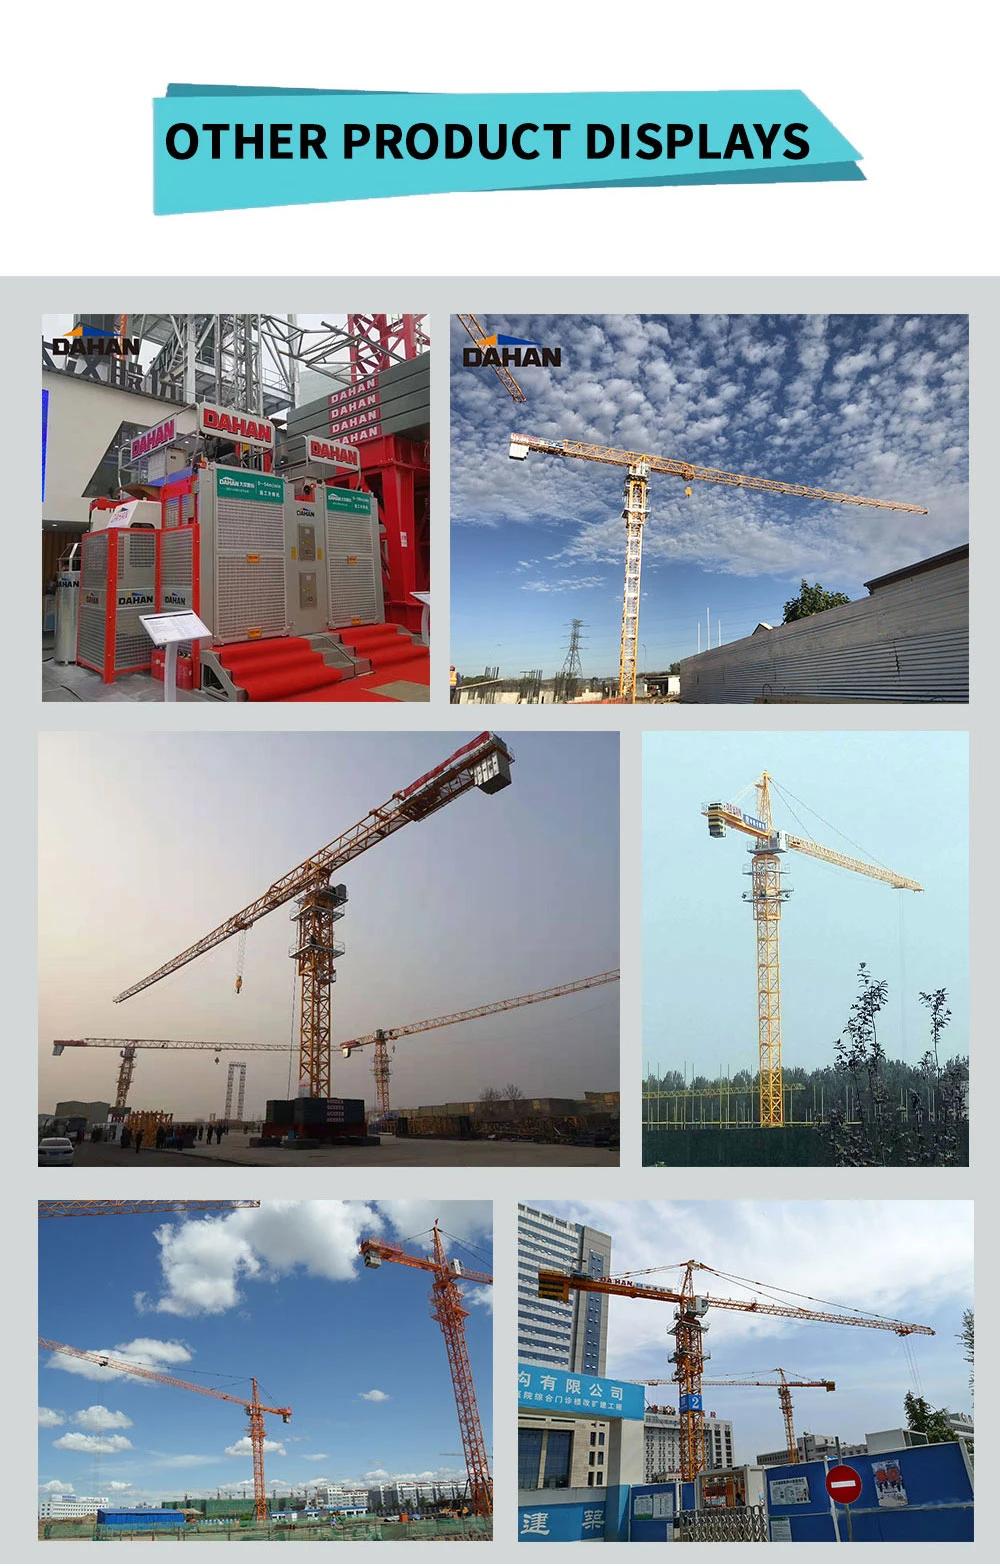 Hammer Head Construction Self-Erecting Tower Crane